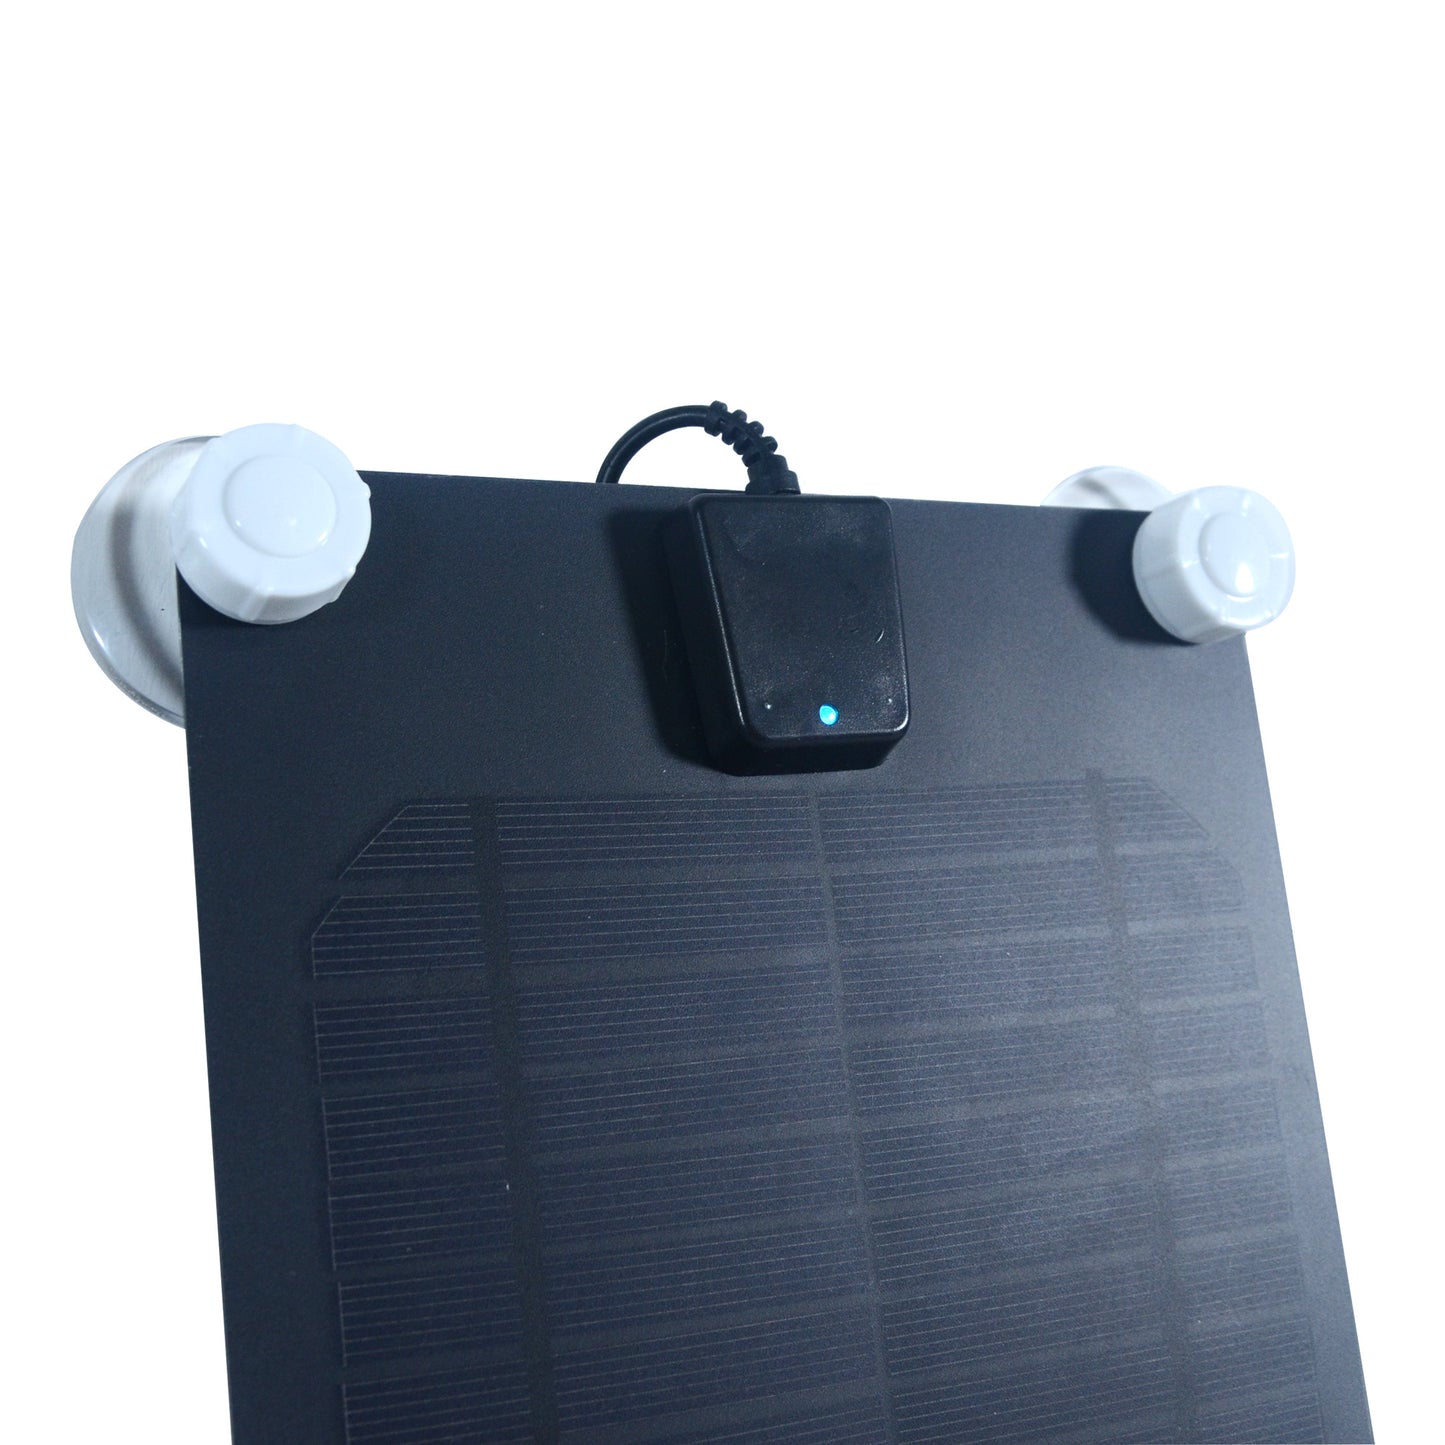 5 Watt Semi-Flex Monocrystalline Solar Panel for 12-Volt Charging (Refurbished)